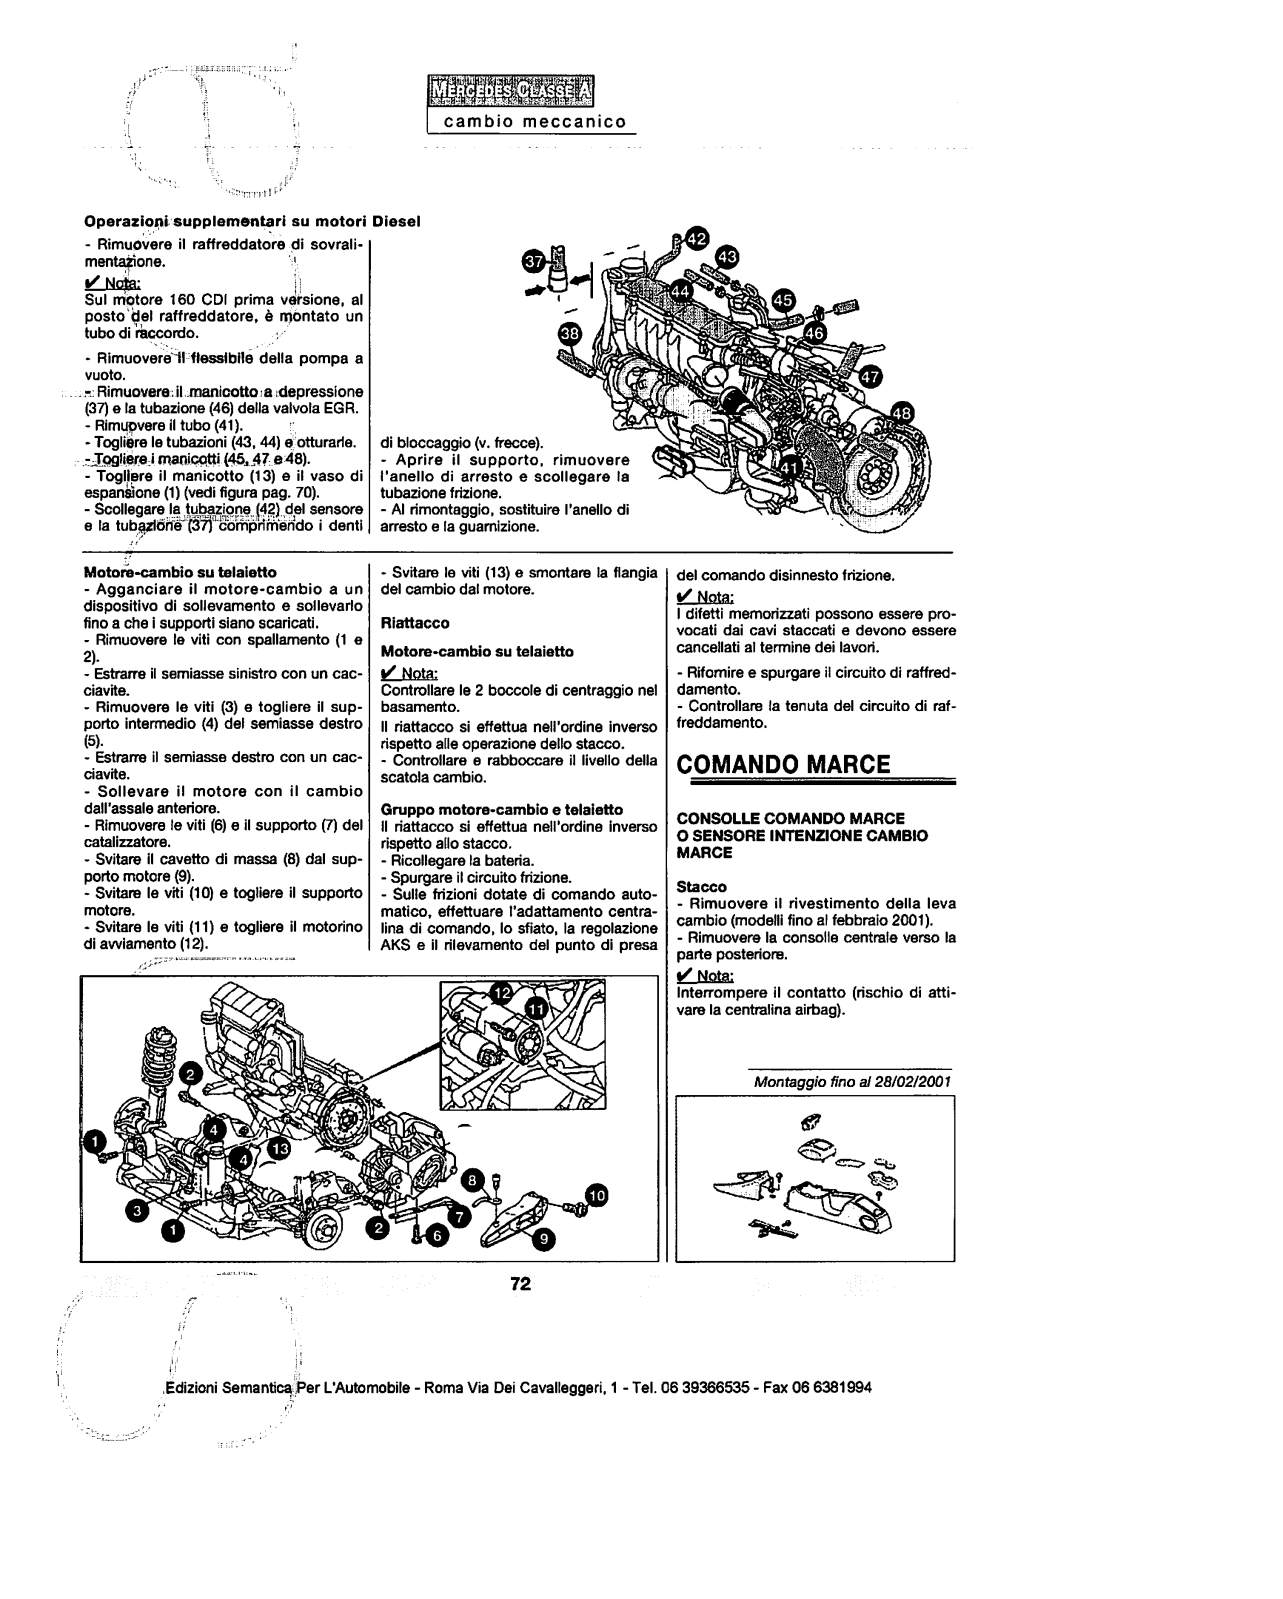 W168 - (W168): Manual técnico - tudo sobre - 1997 a 2004 - italiano 3133qq9